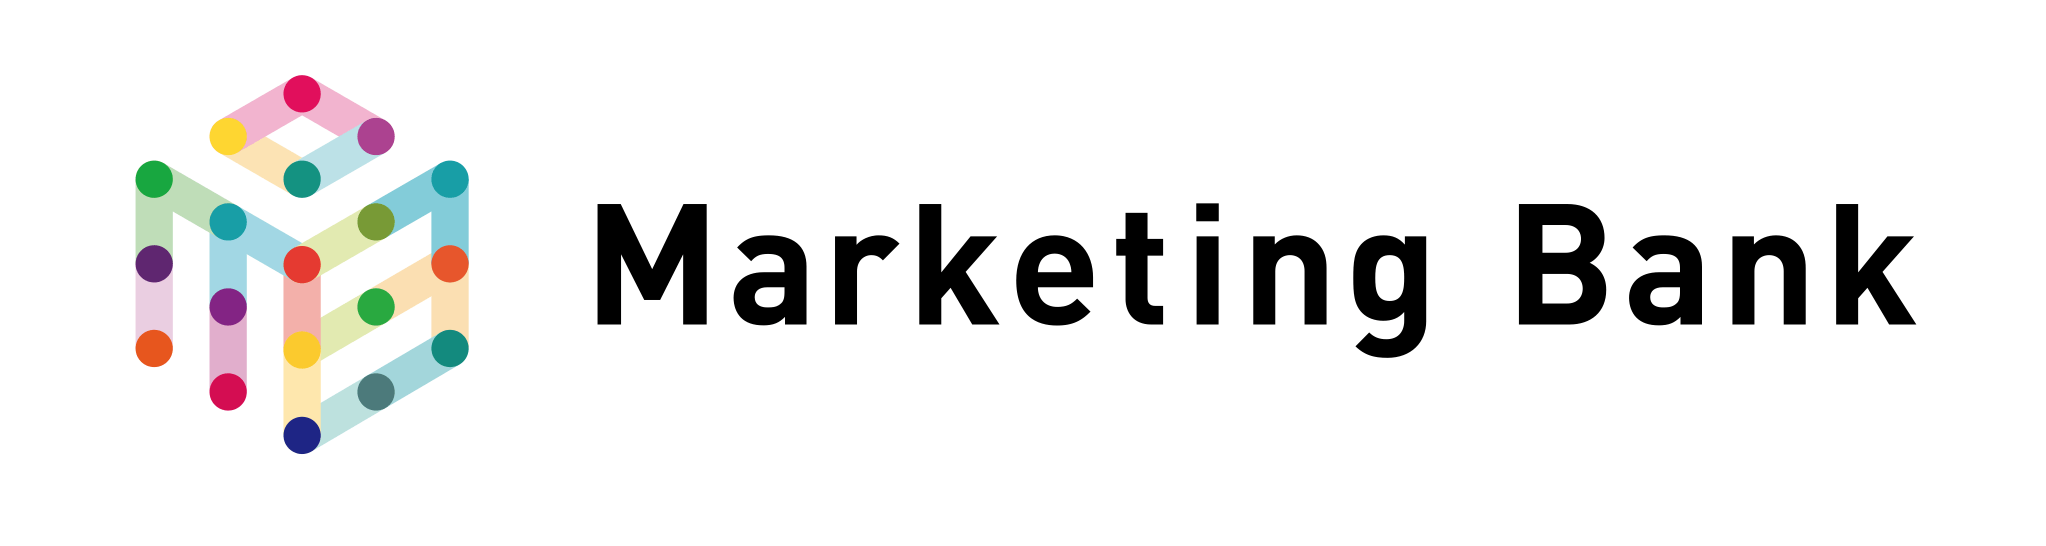 Marketing Bank